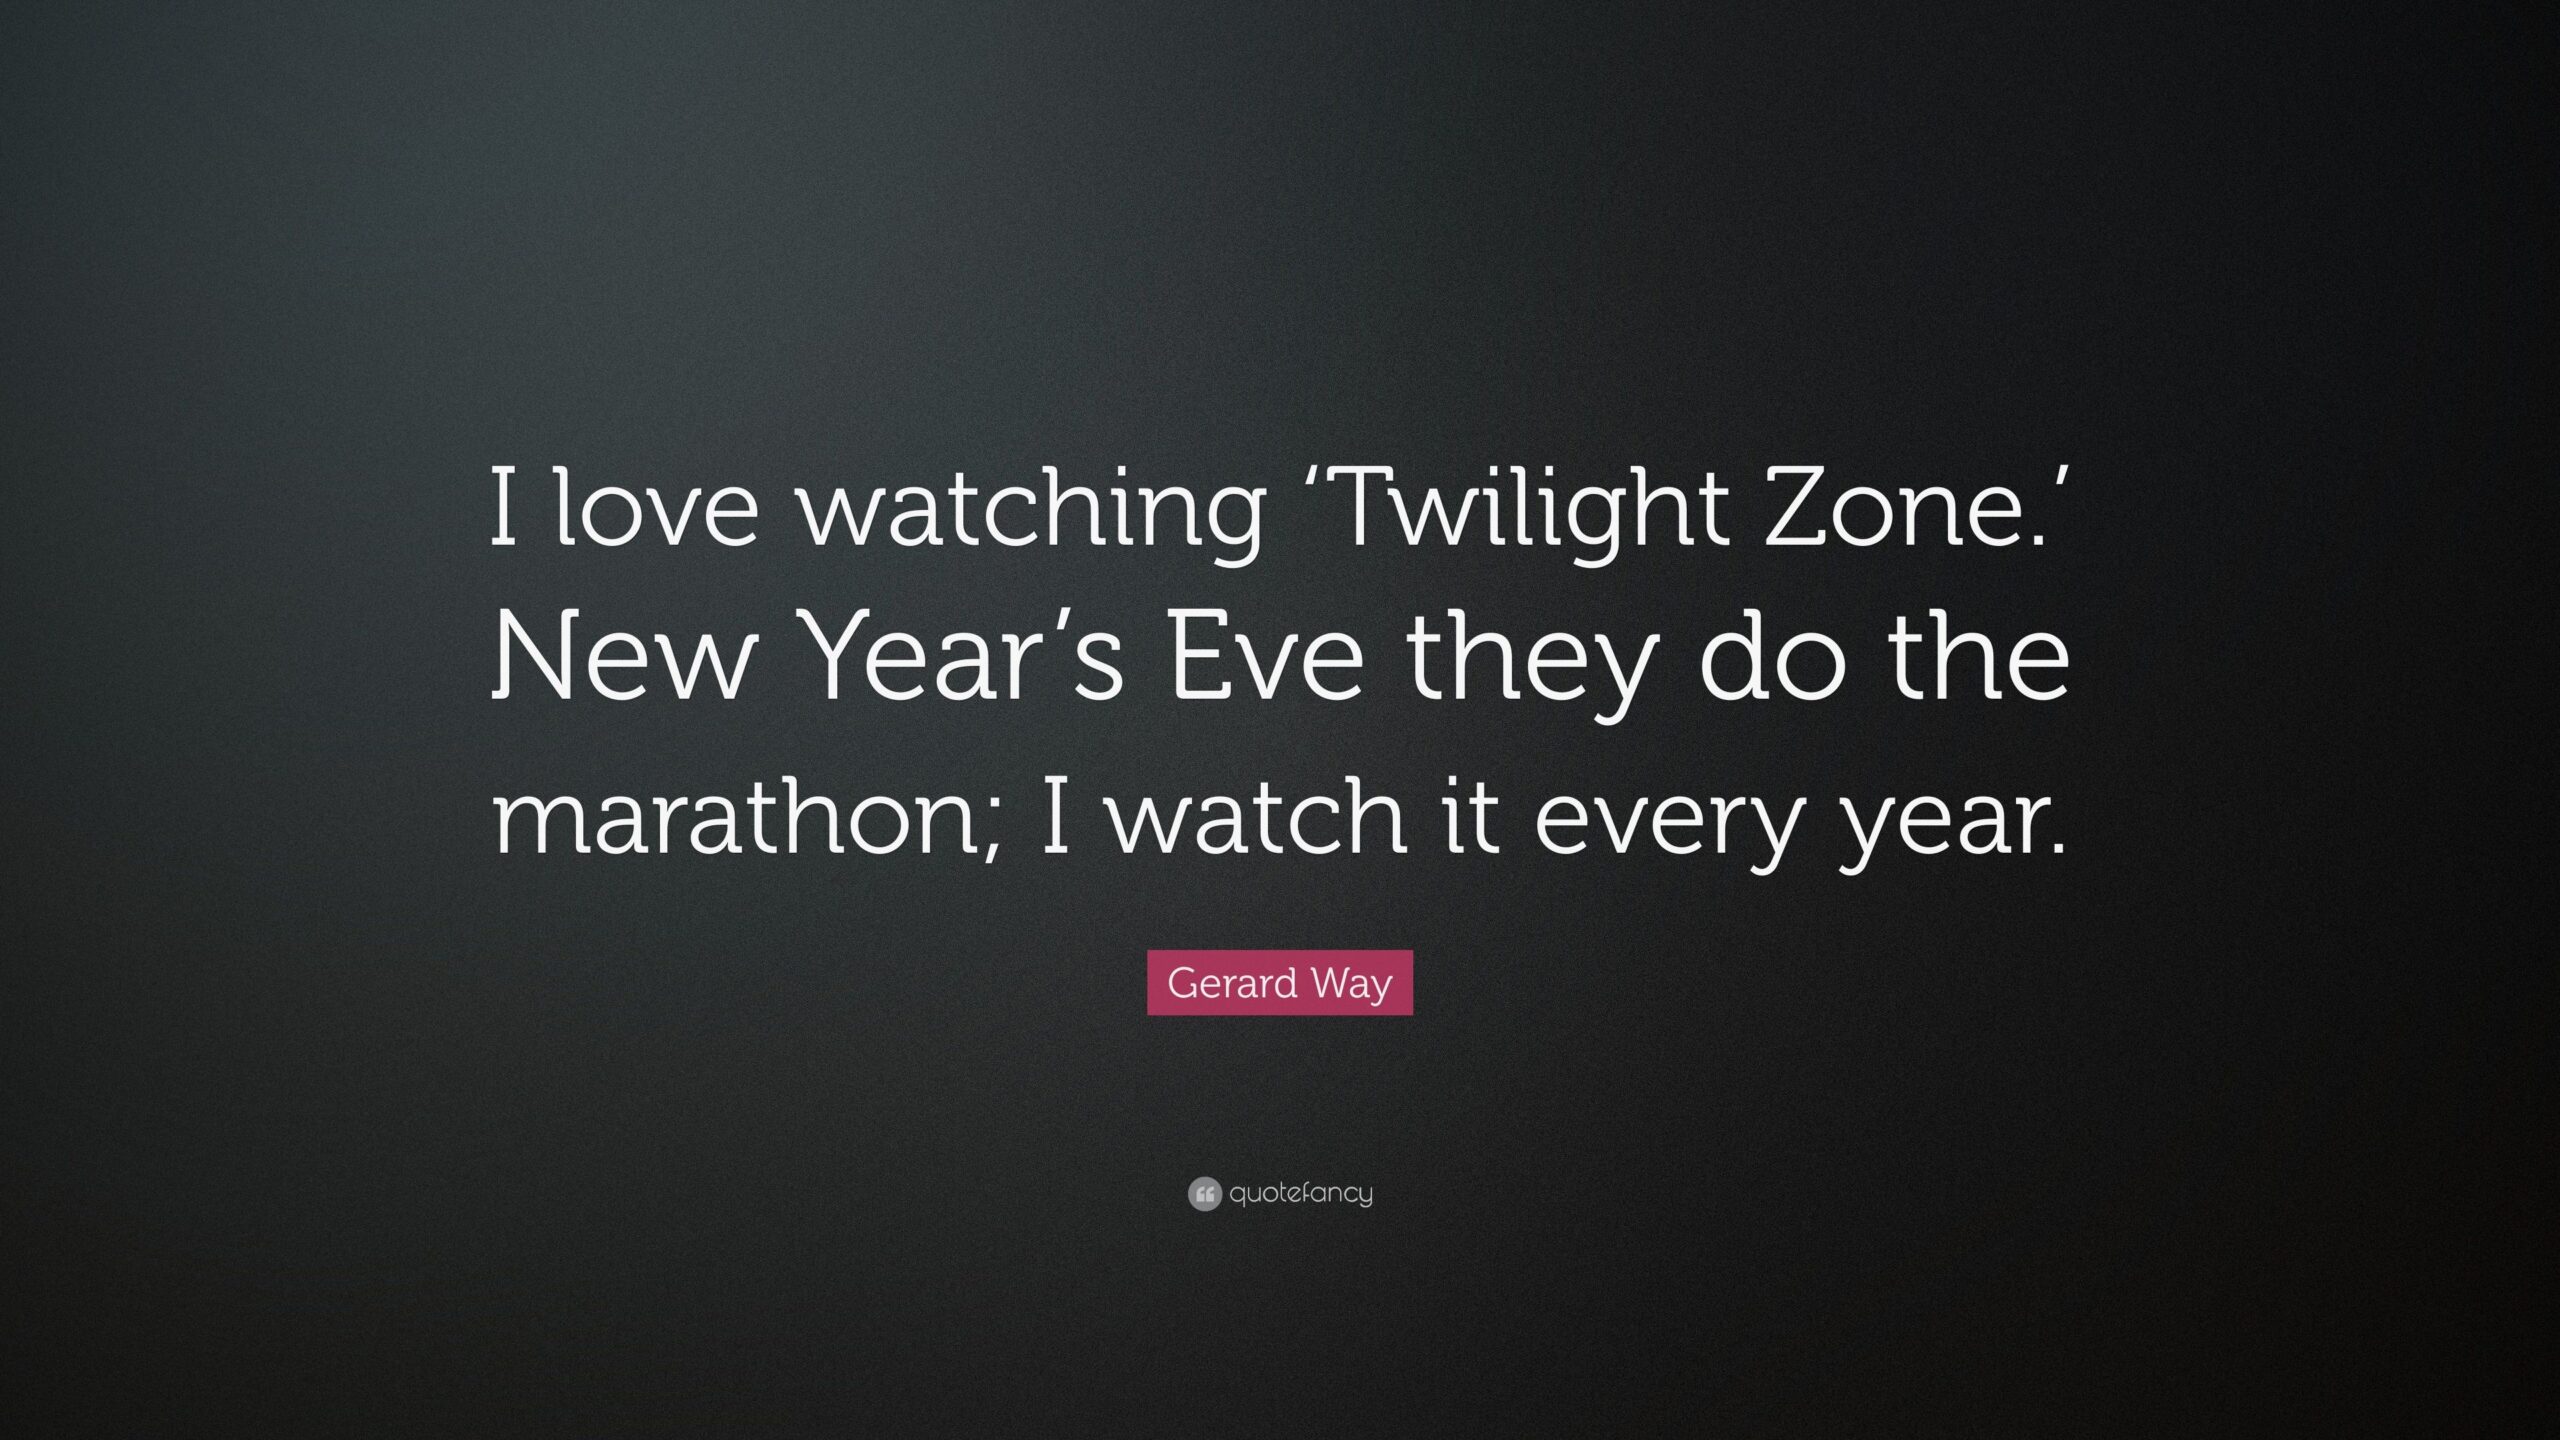 Gerard Way Quote “I love watching ‘Twilight Zone’ New Year’s Eve